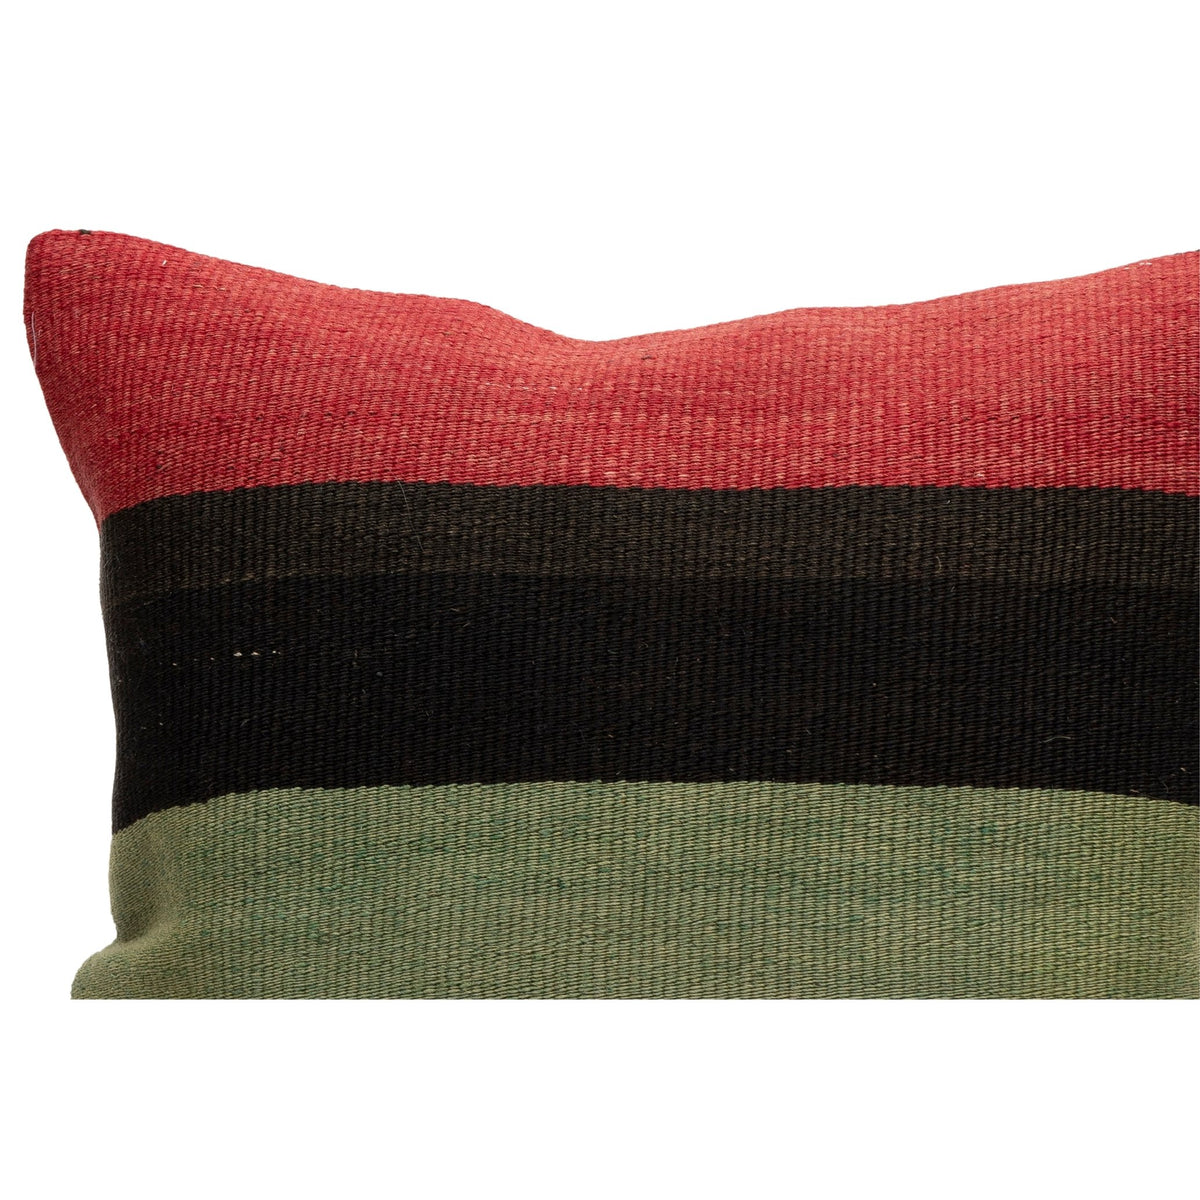 Vintage Striped Handwoven Kilim Cushion Cover 16" x 16"